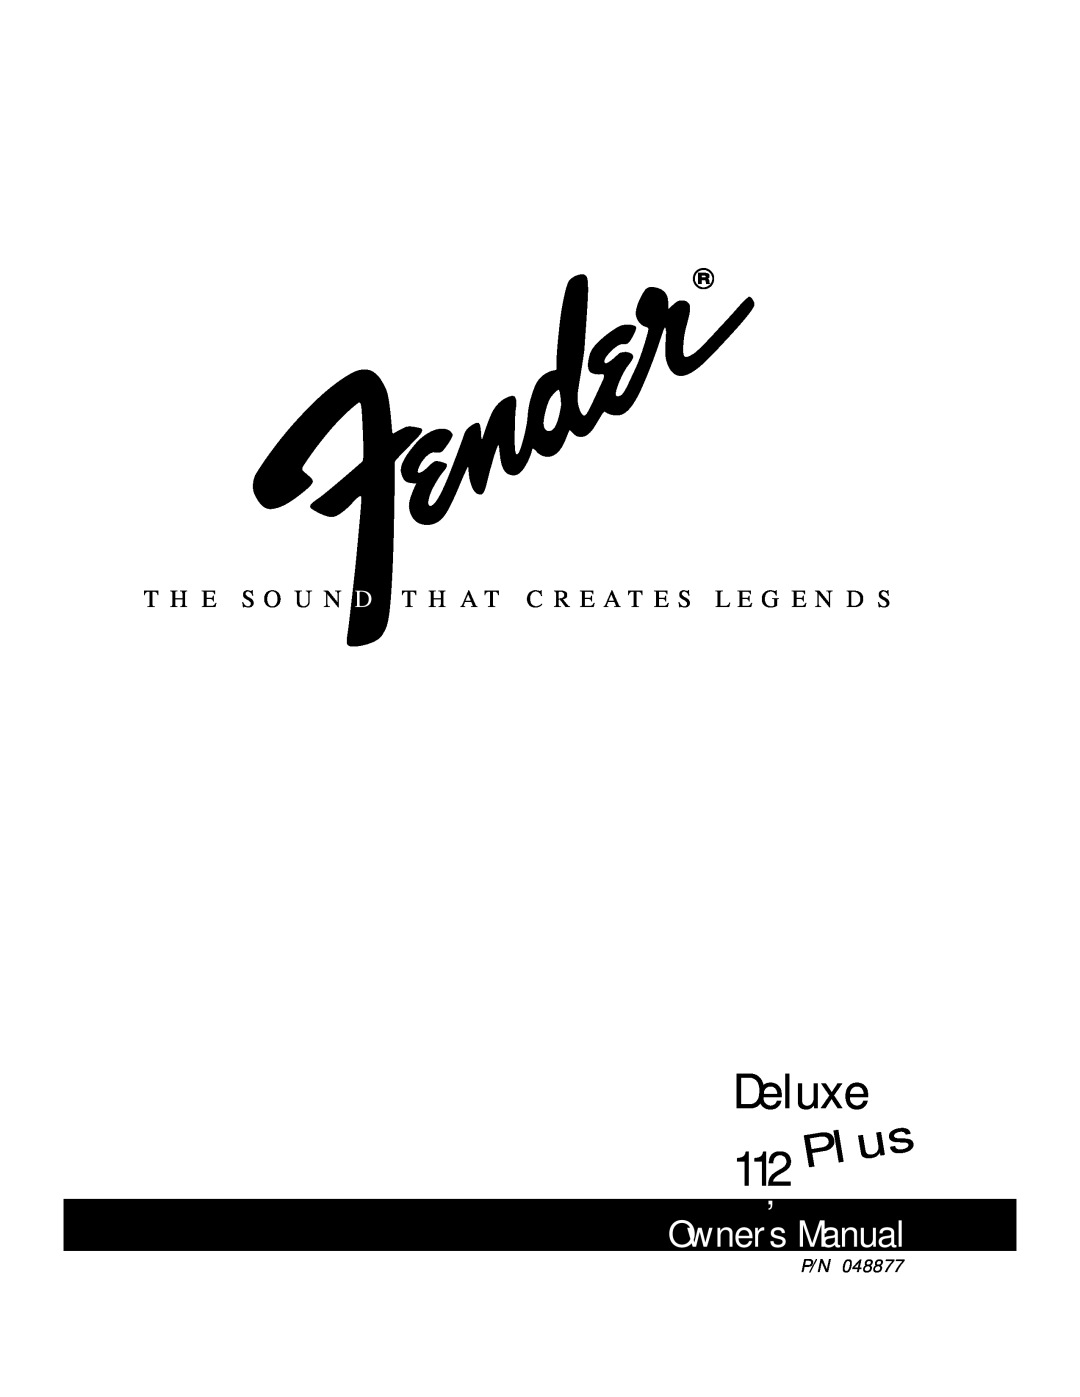 Fender 112 owner manual Deluxe, Owner s Manual, T H E S O U N D T H A T C R E A T E S L E G E N D S 